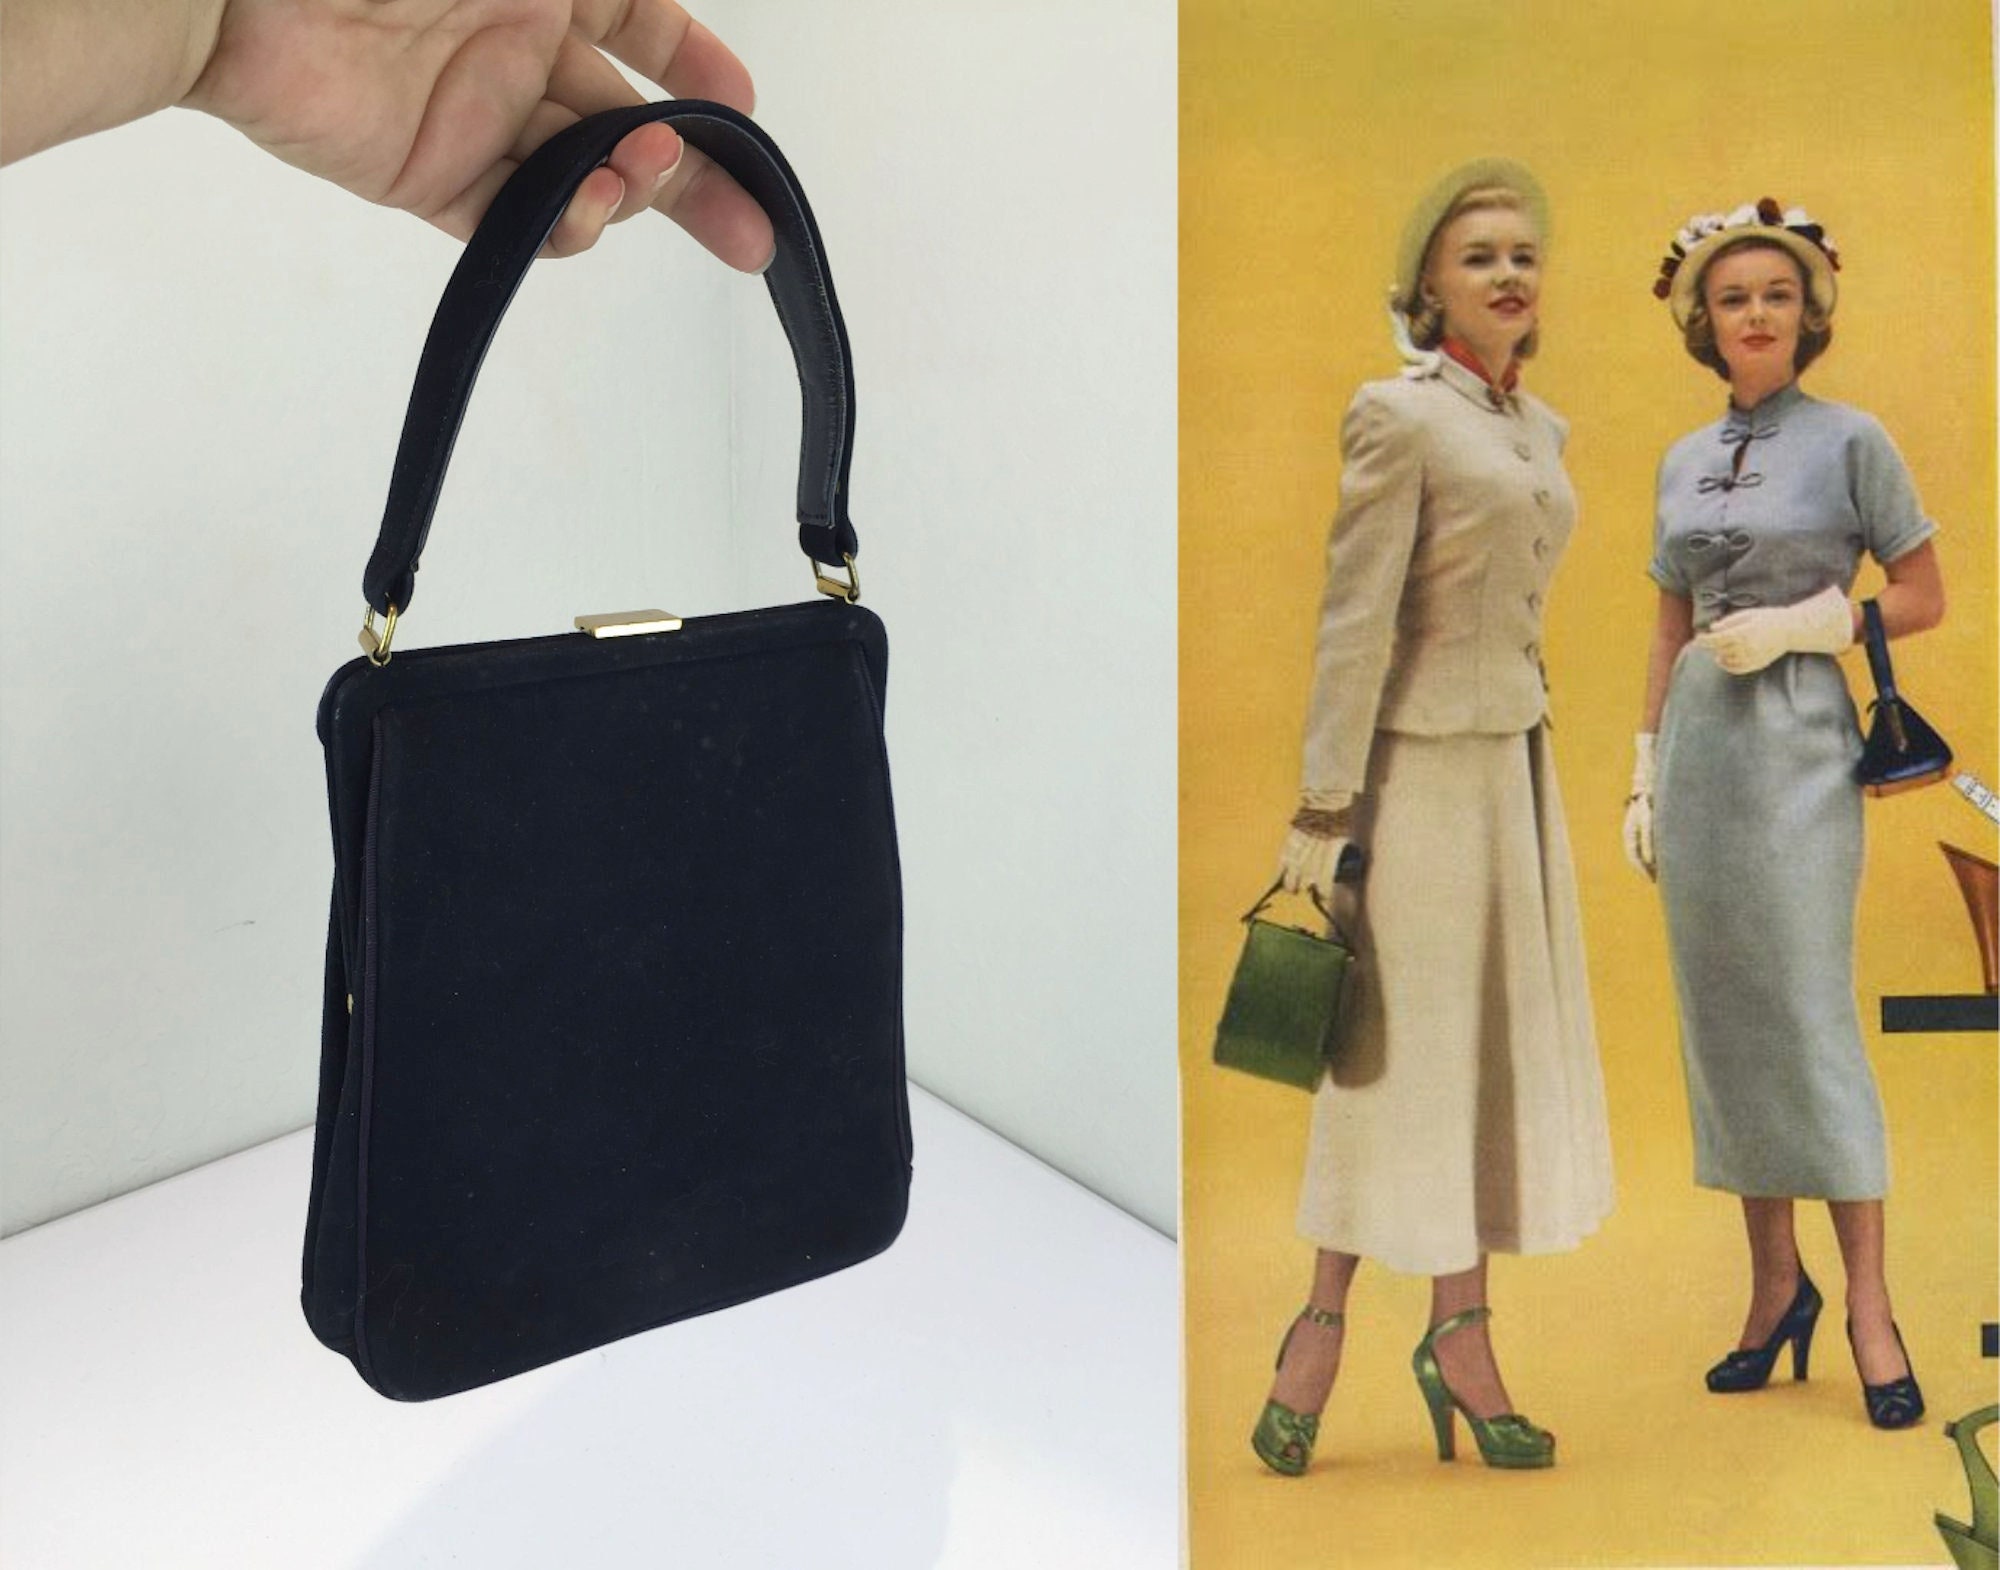 Launer Handbags 